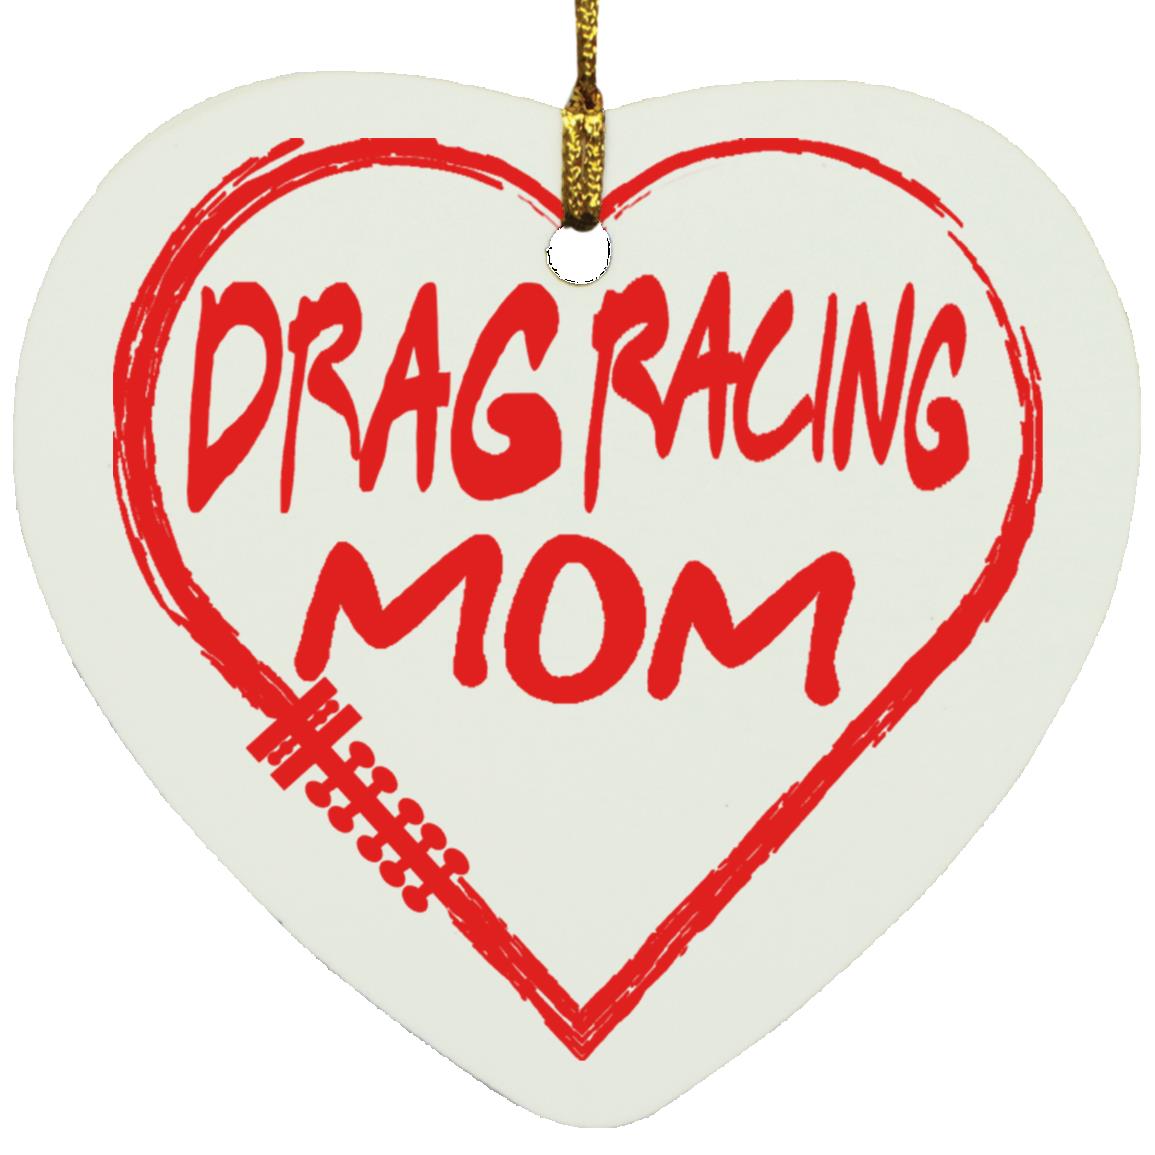 Drag Racing Mom Heart Ornament